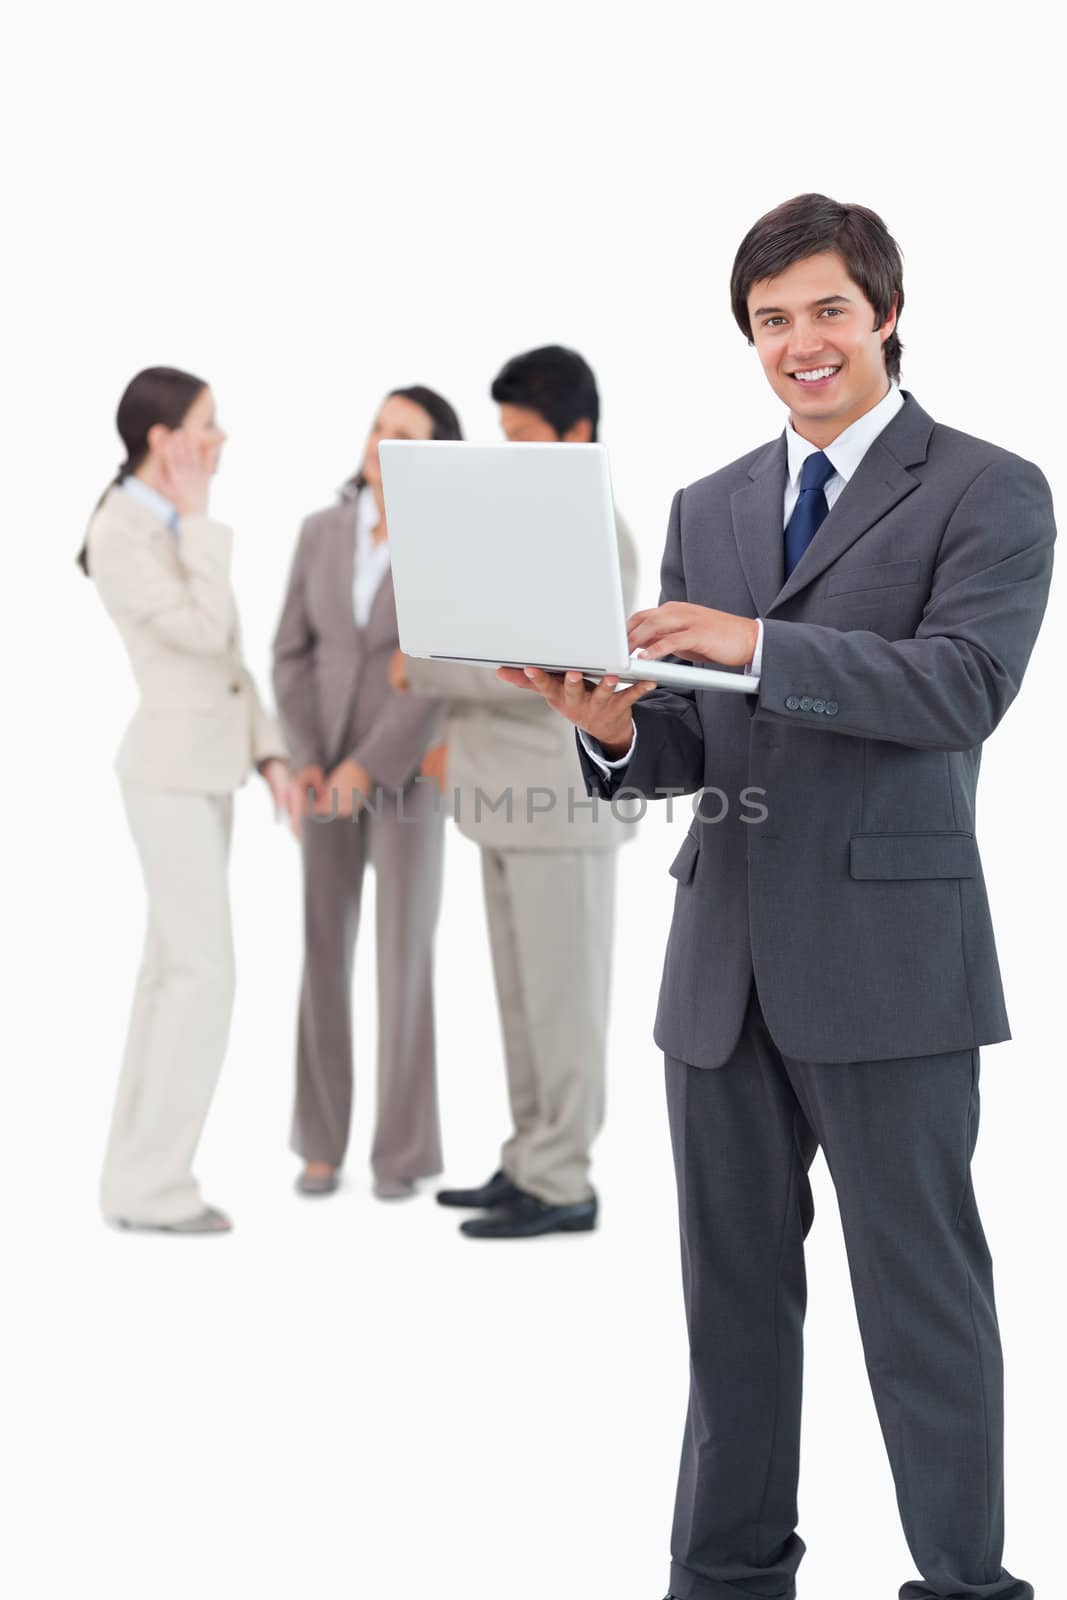 Smiling salesman with laptop and team behind him by Wavebreakmedia